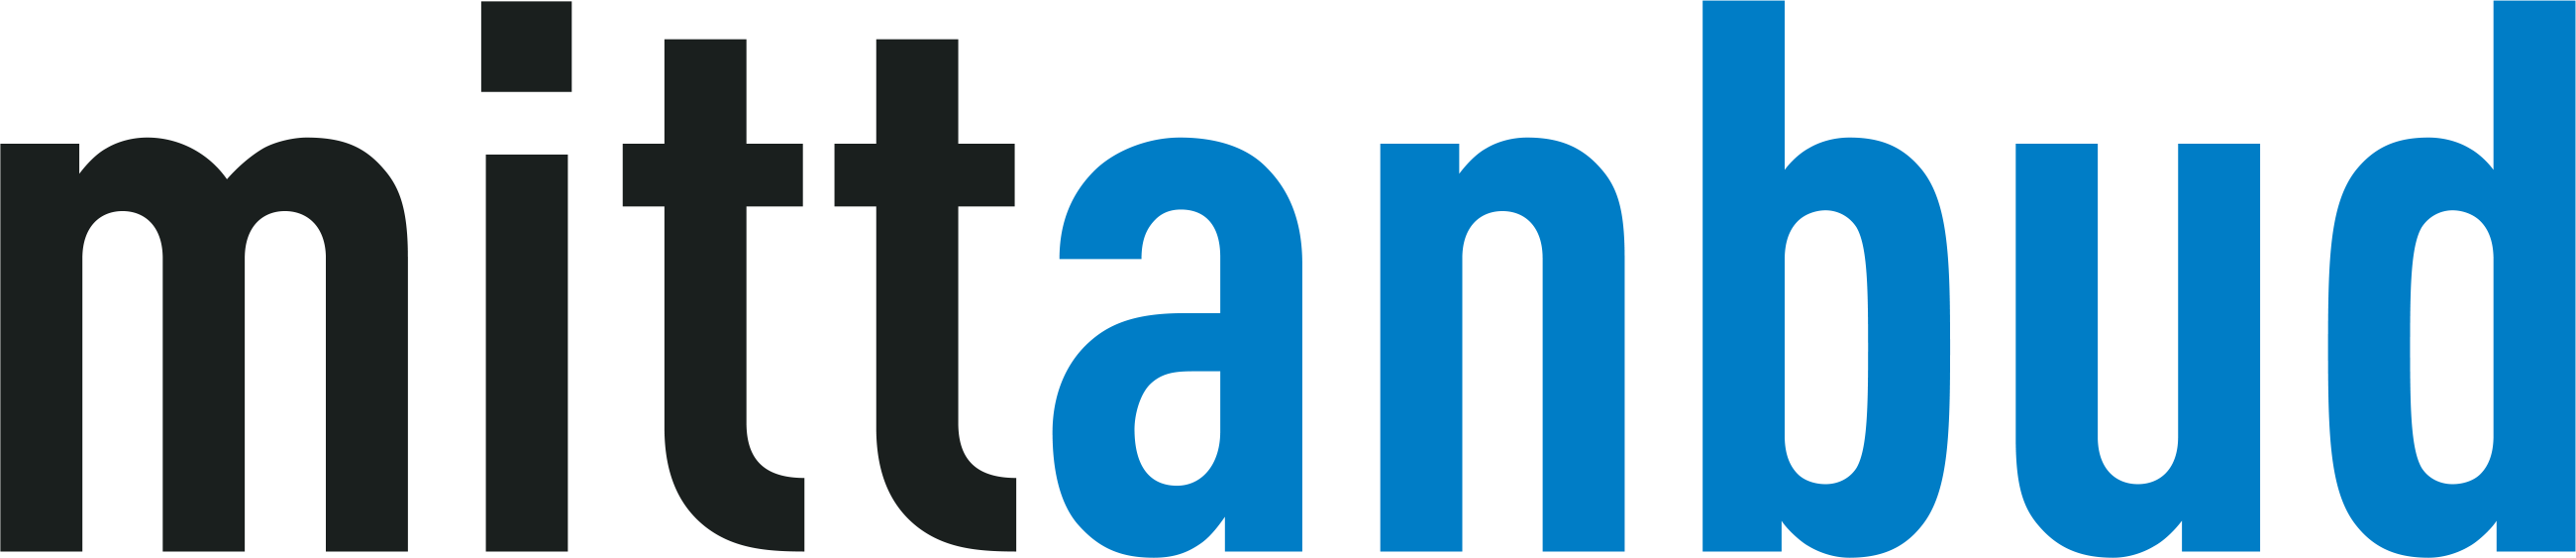 Logo av Mittanbud